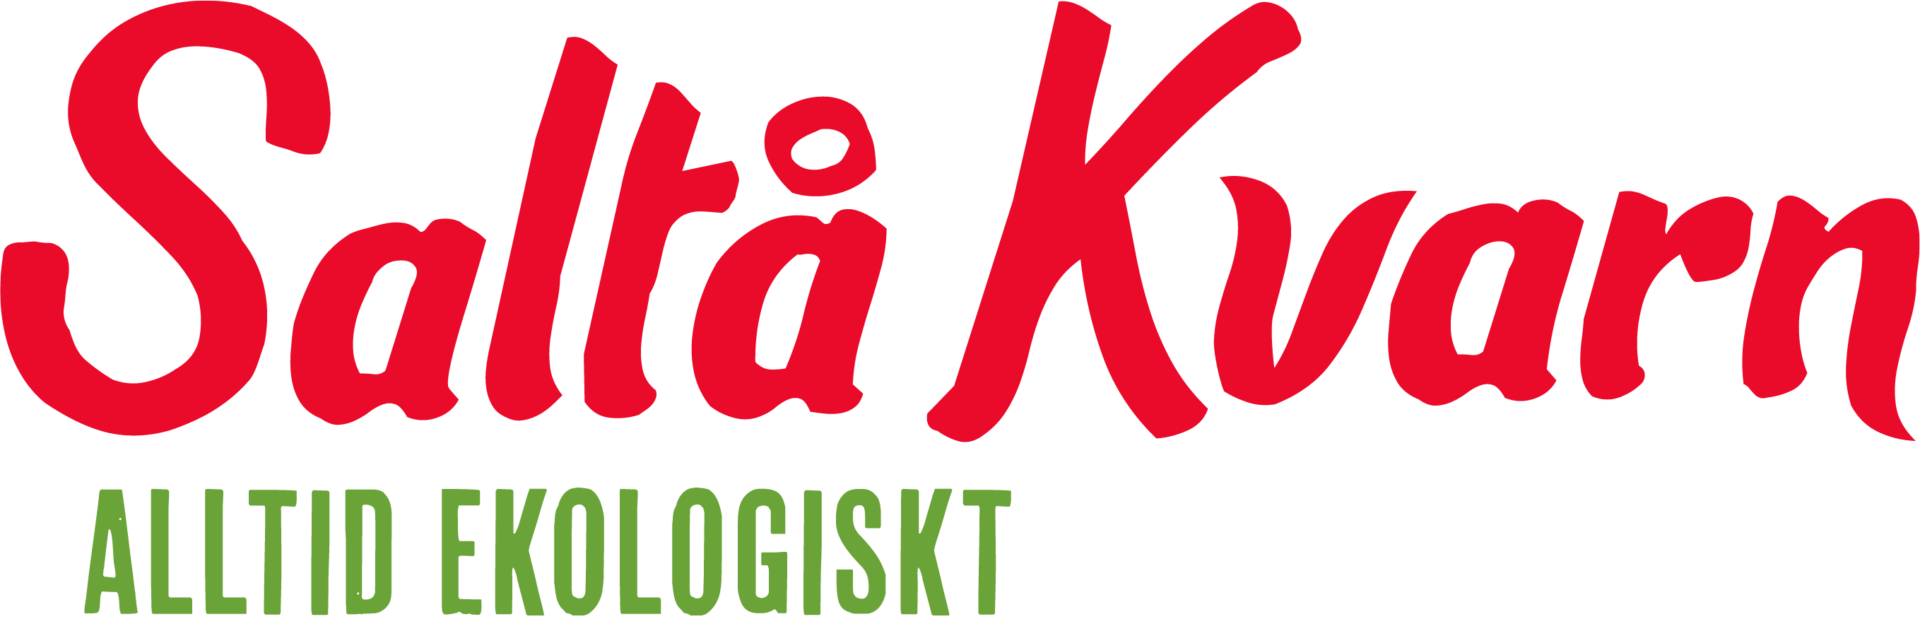 Logo_Stor_vansterrstalld_RGB